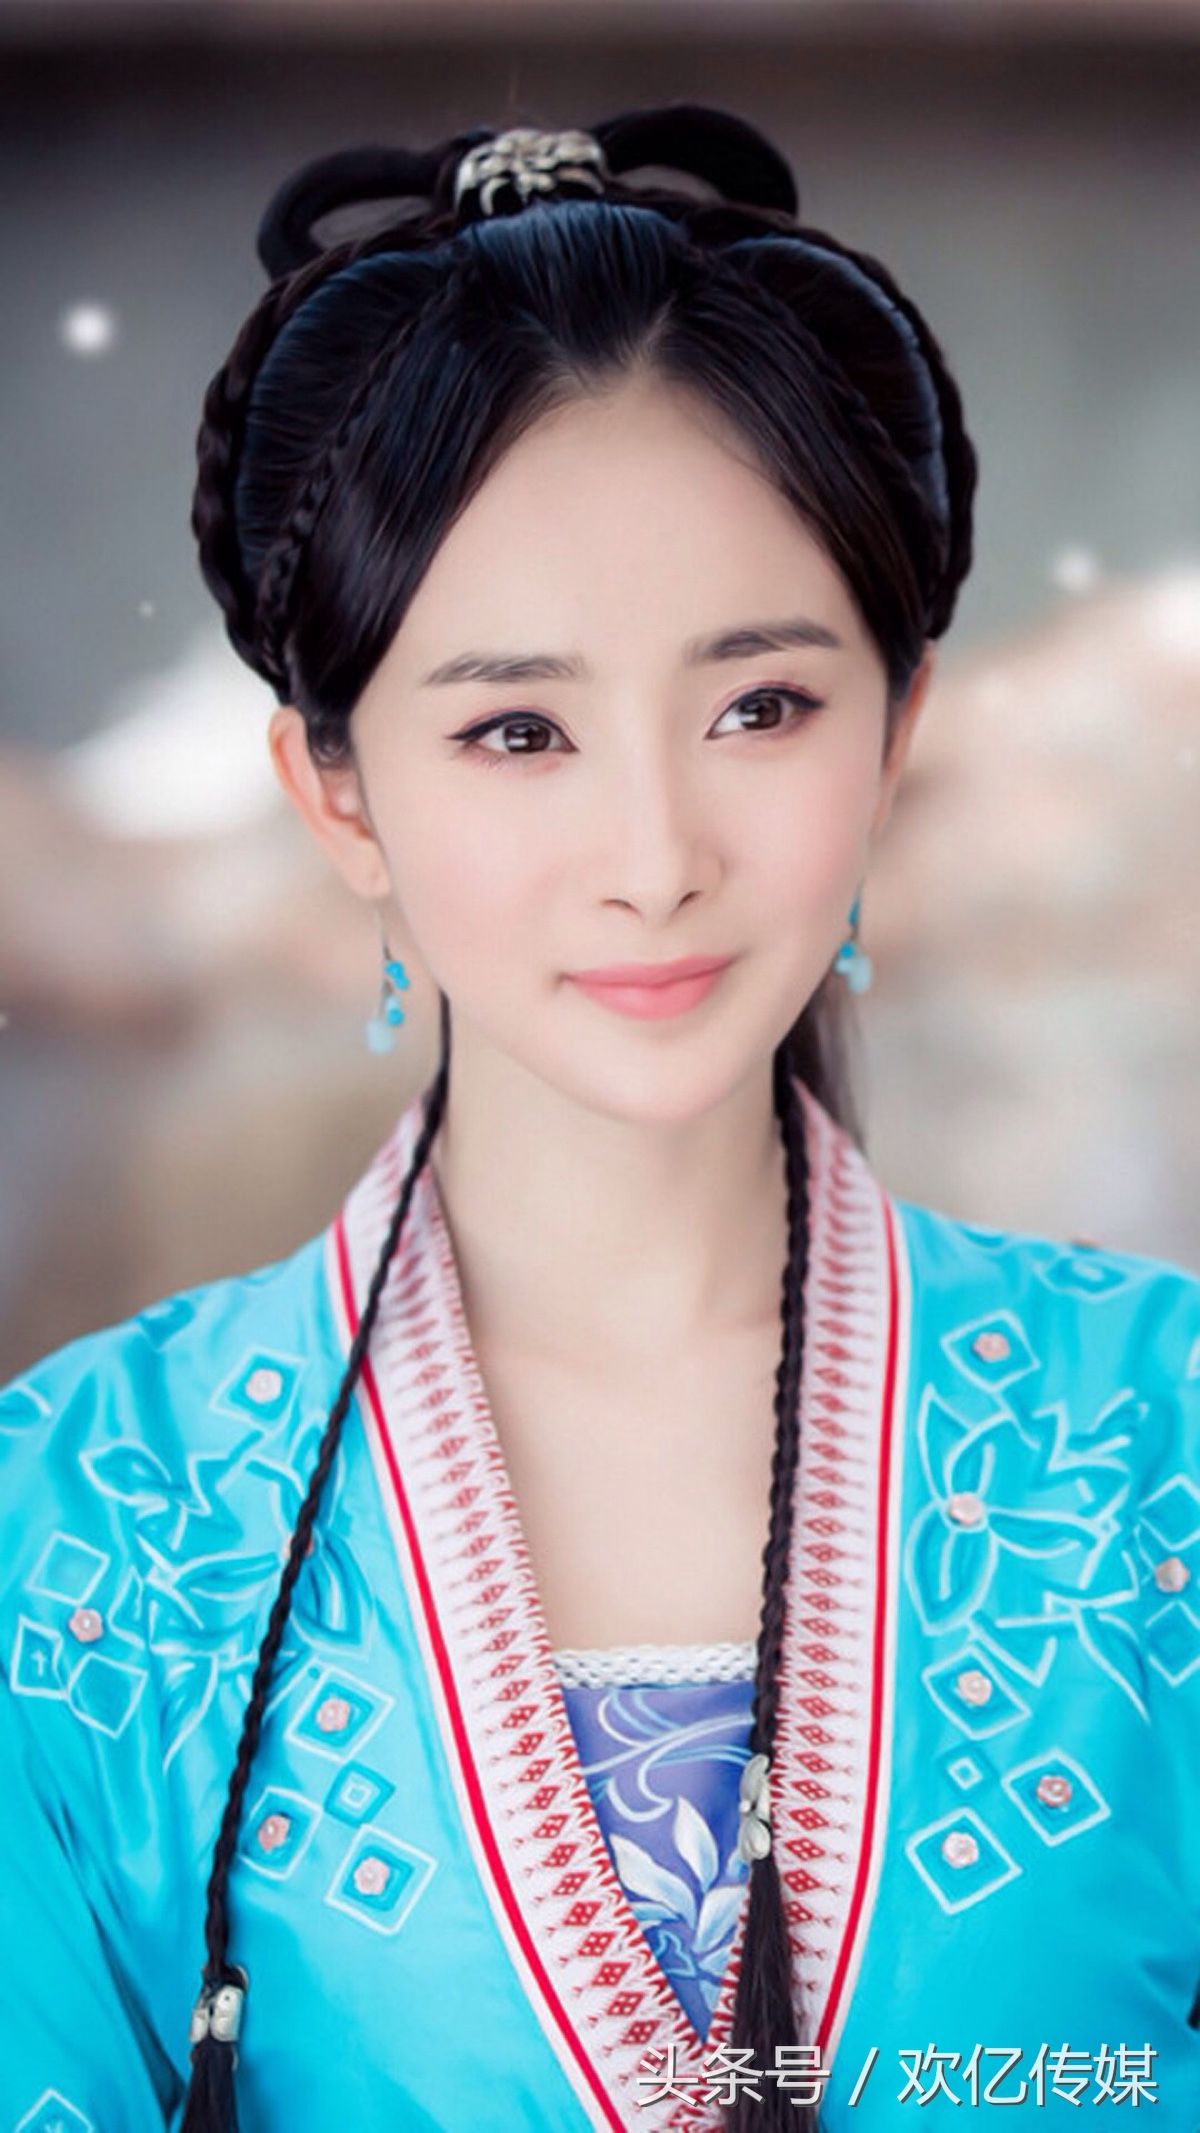 Wallpaper : hanfu, Chinese dress 1500x1000 - evoandroidevo - 1326977 - HD Wallpapers - WallHere